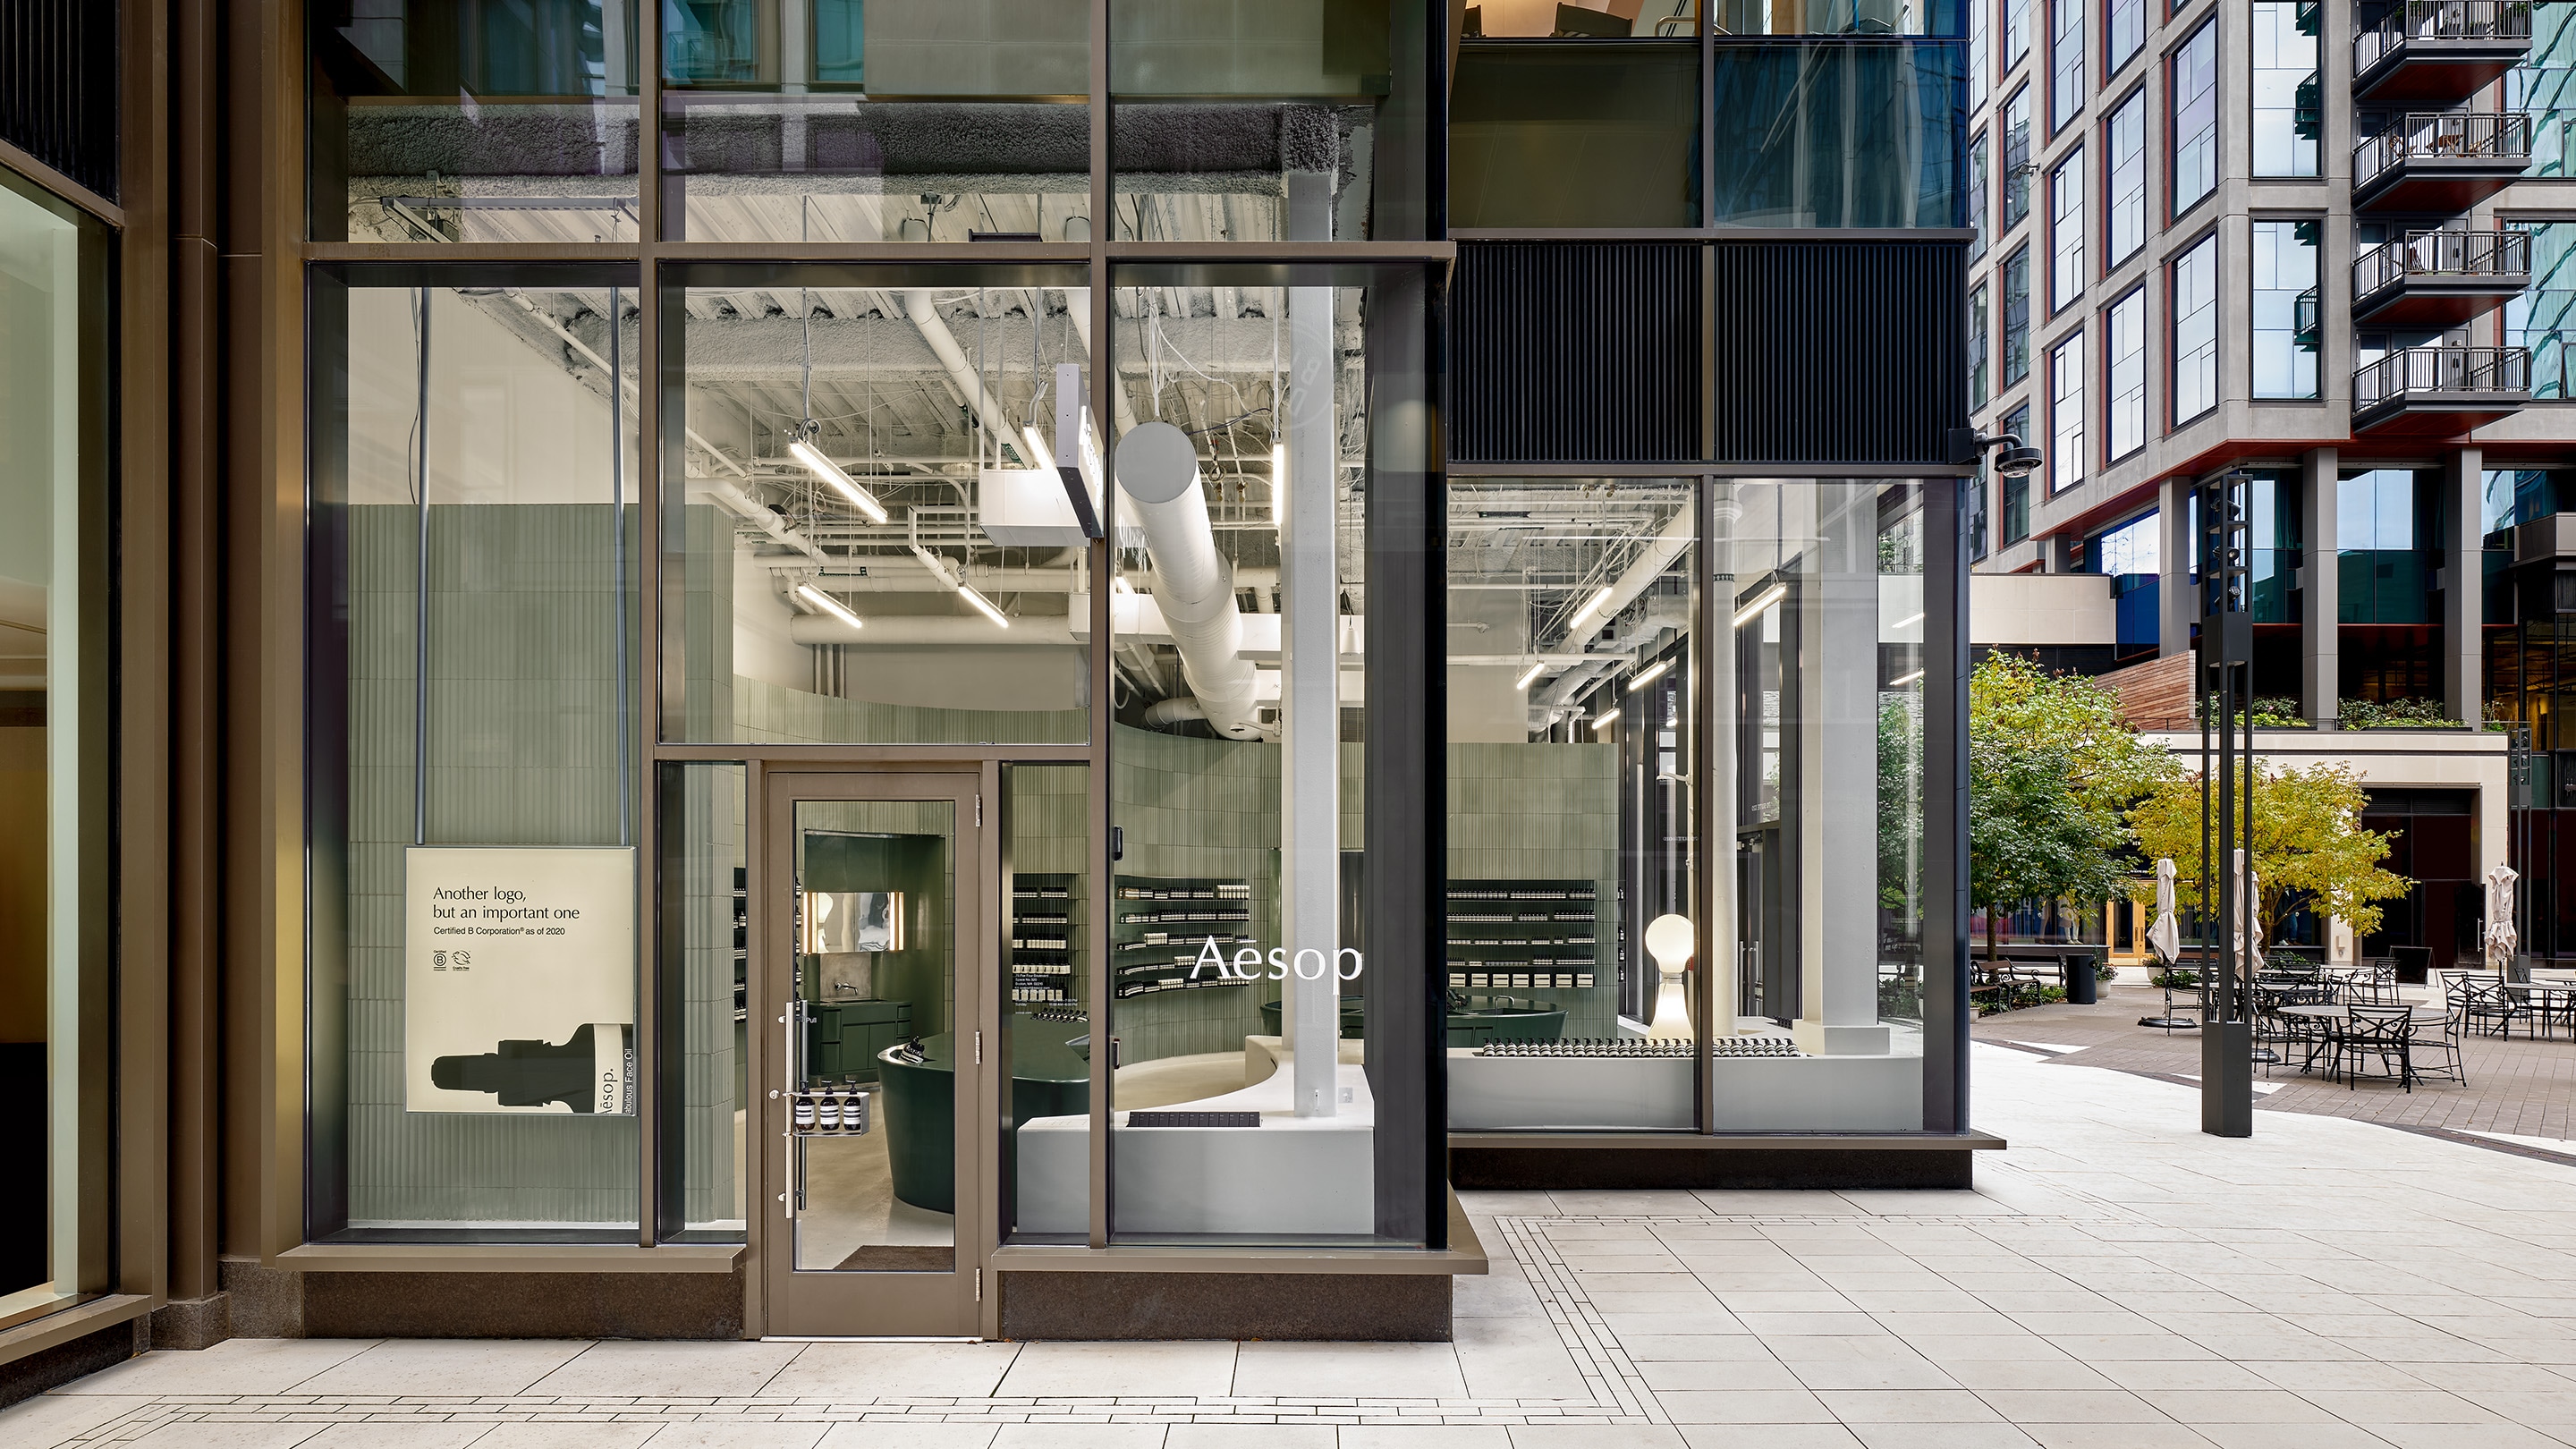 Aesop storefront featuring glass window walls on sidewalk corner with grey store interior visible through windows